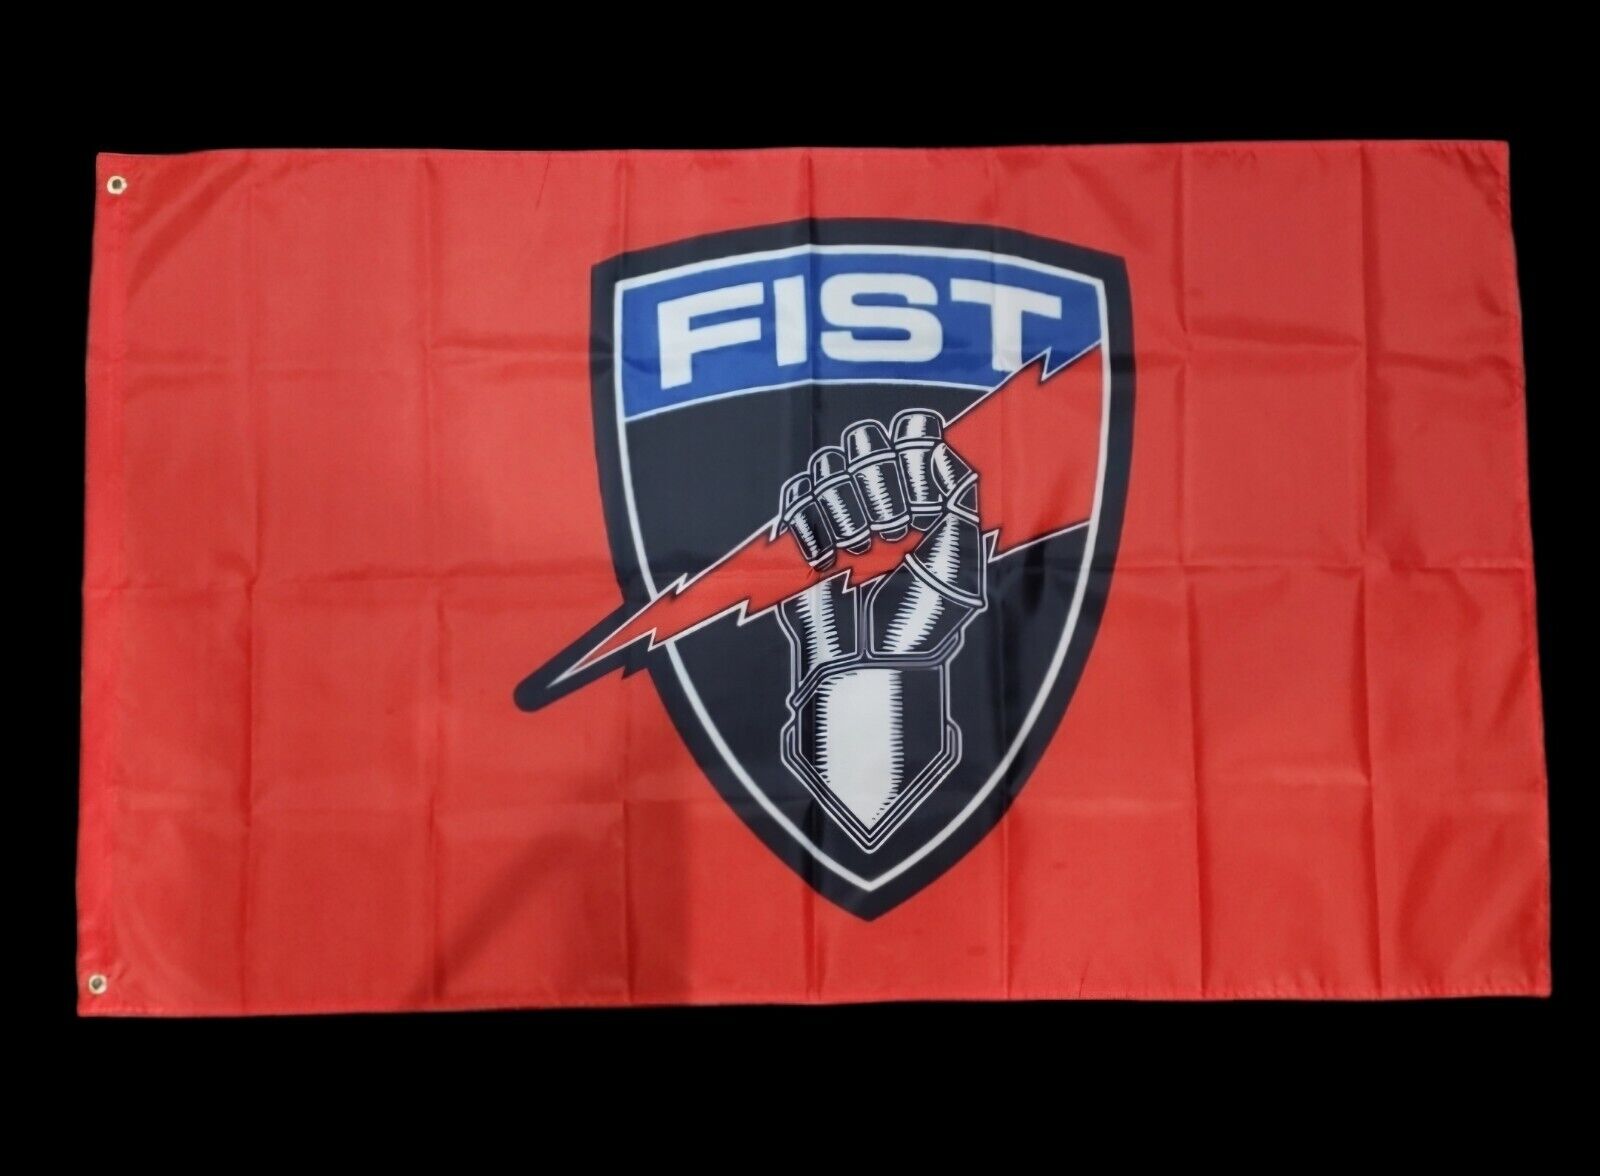 Army FIST Shield flag forward observer Fister 13f 3'x5' 